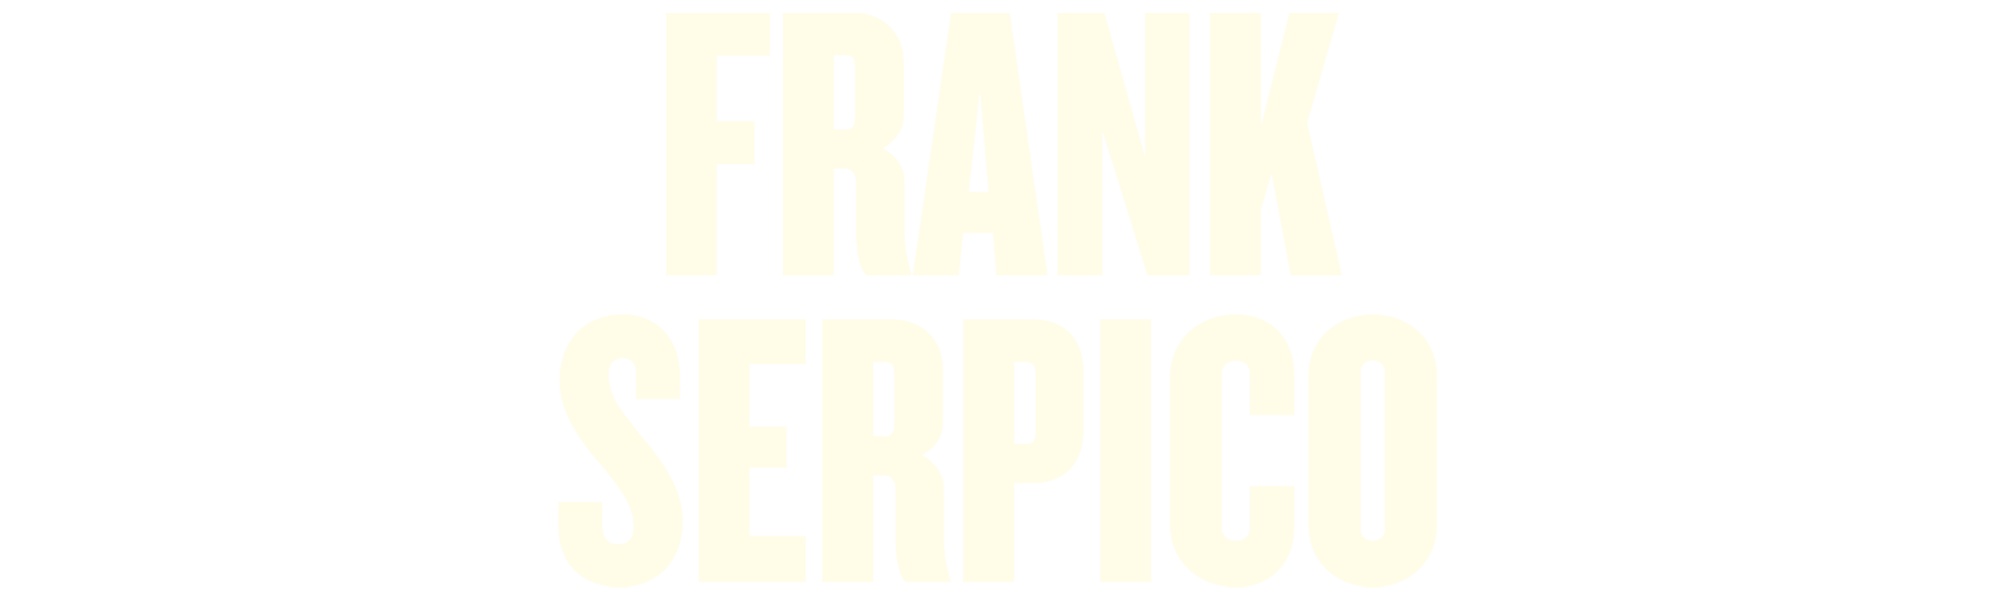 Frank Serpico